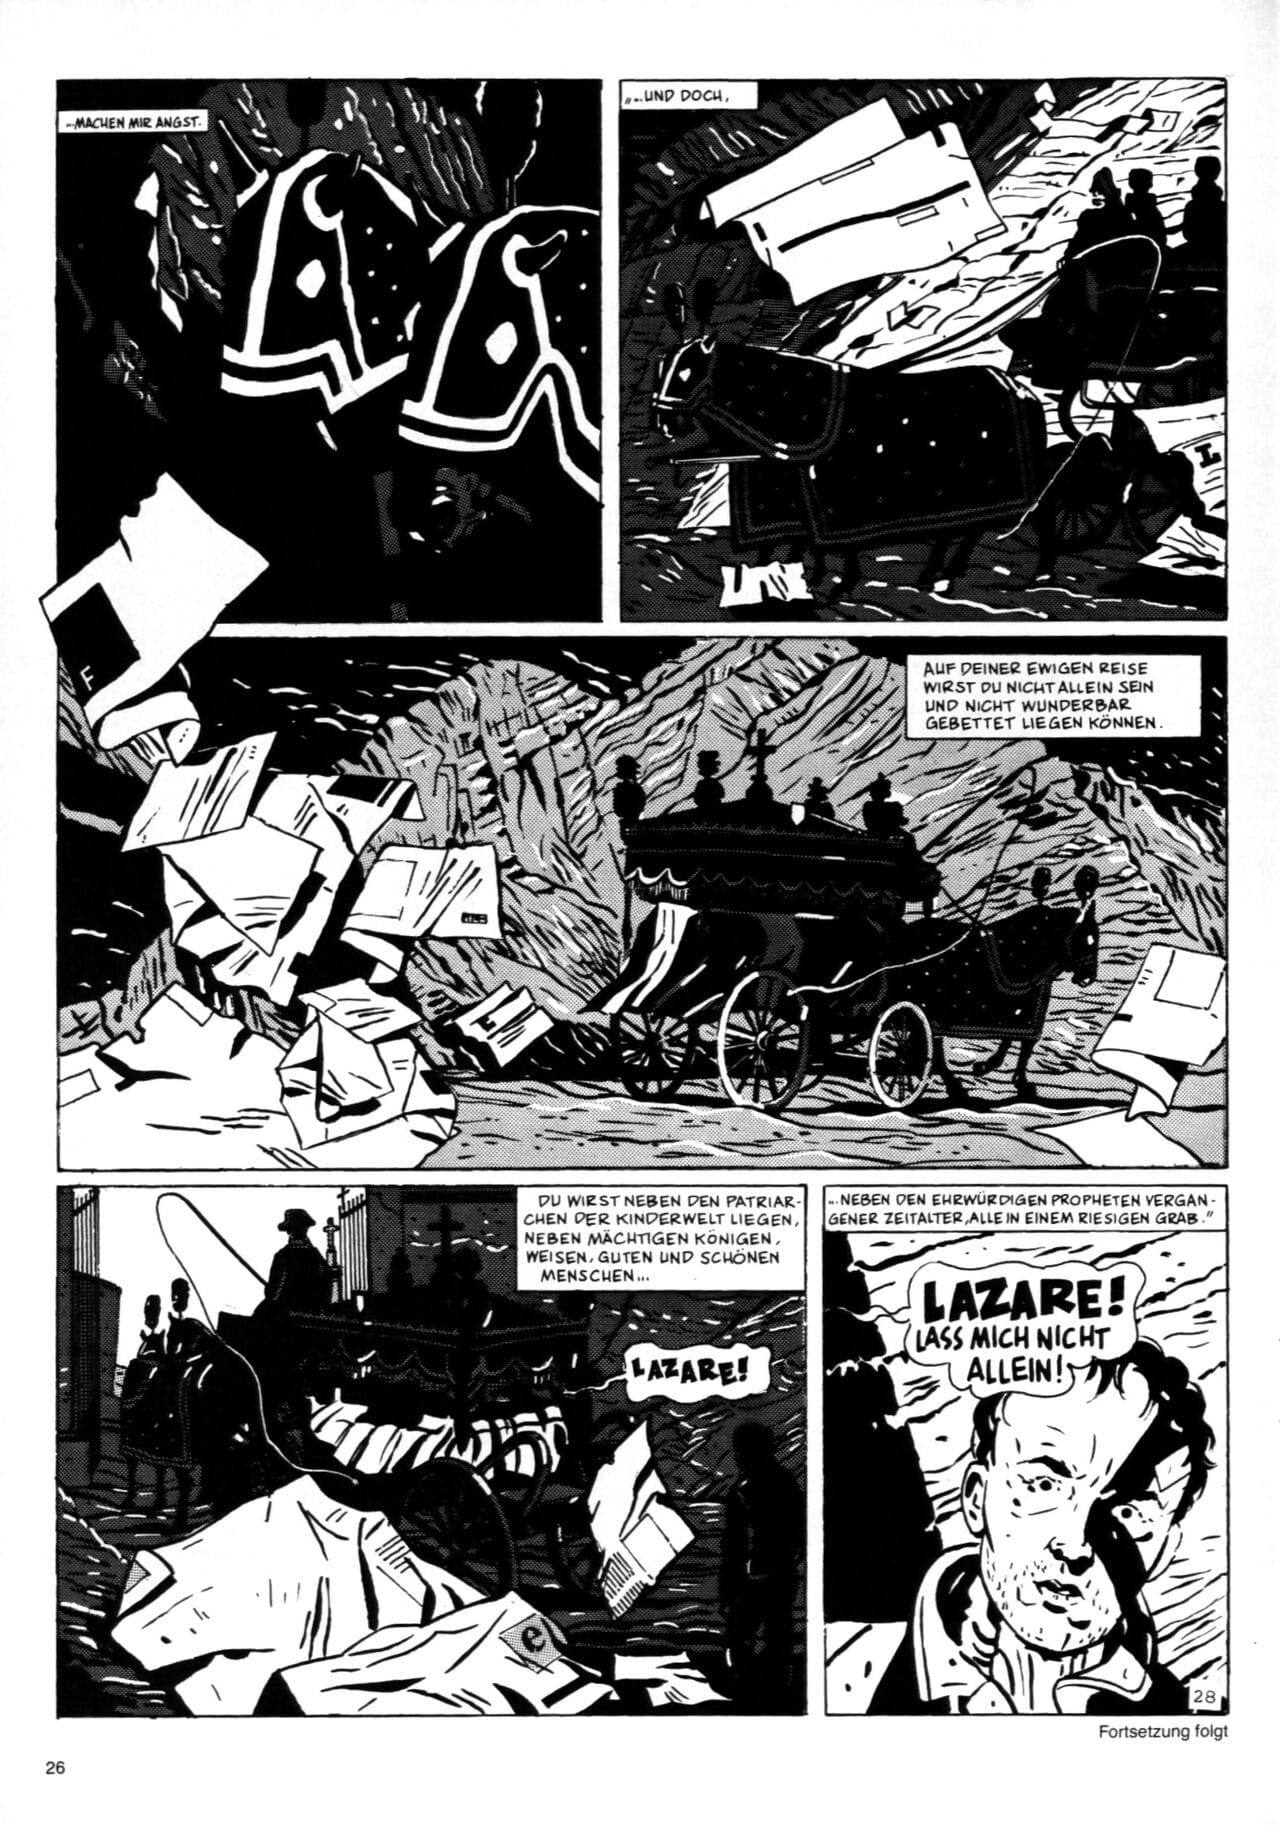 schwermetall #095 parte 2 page 1